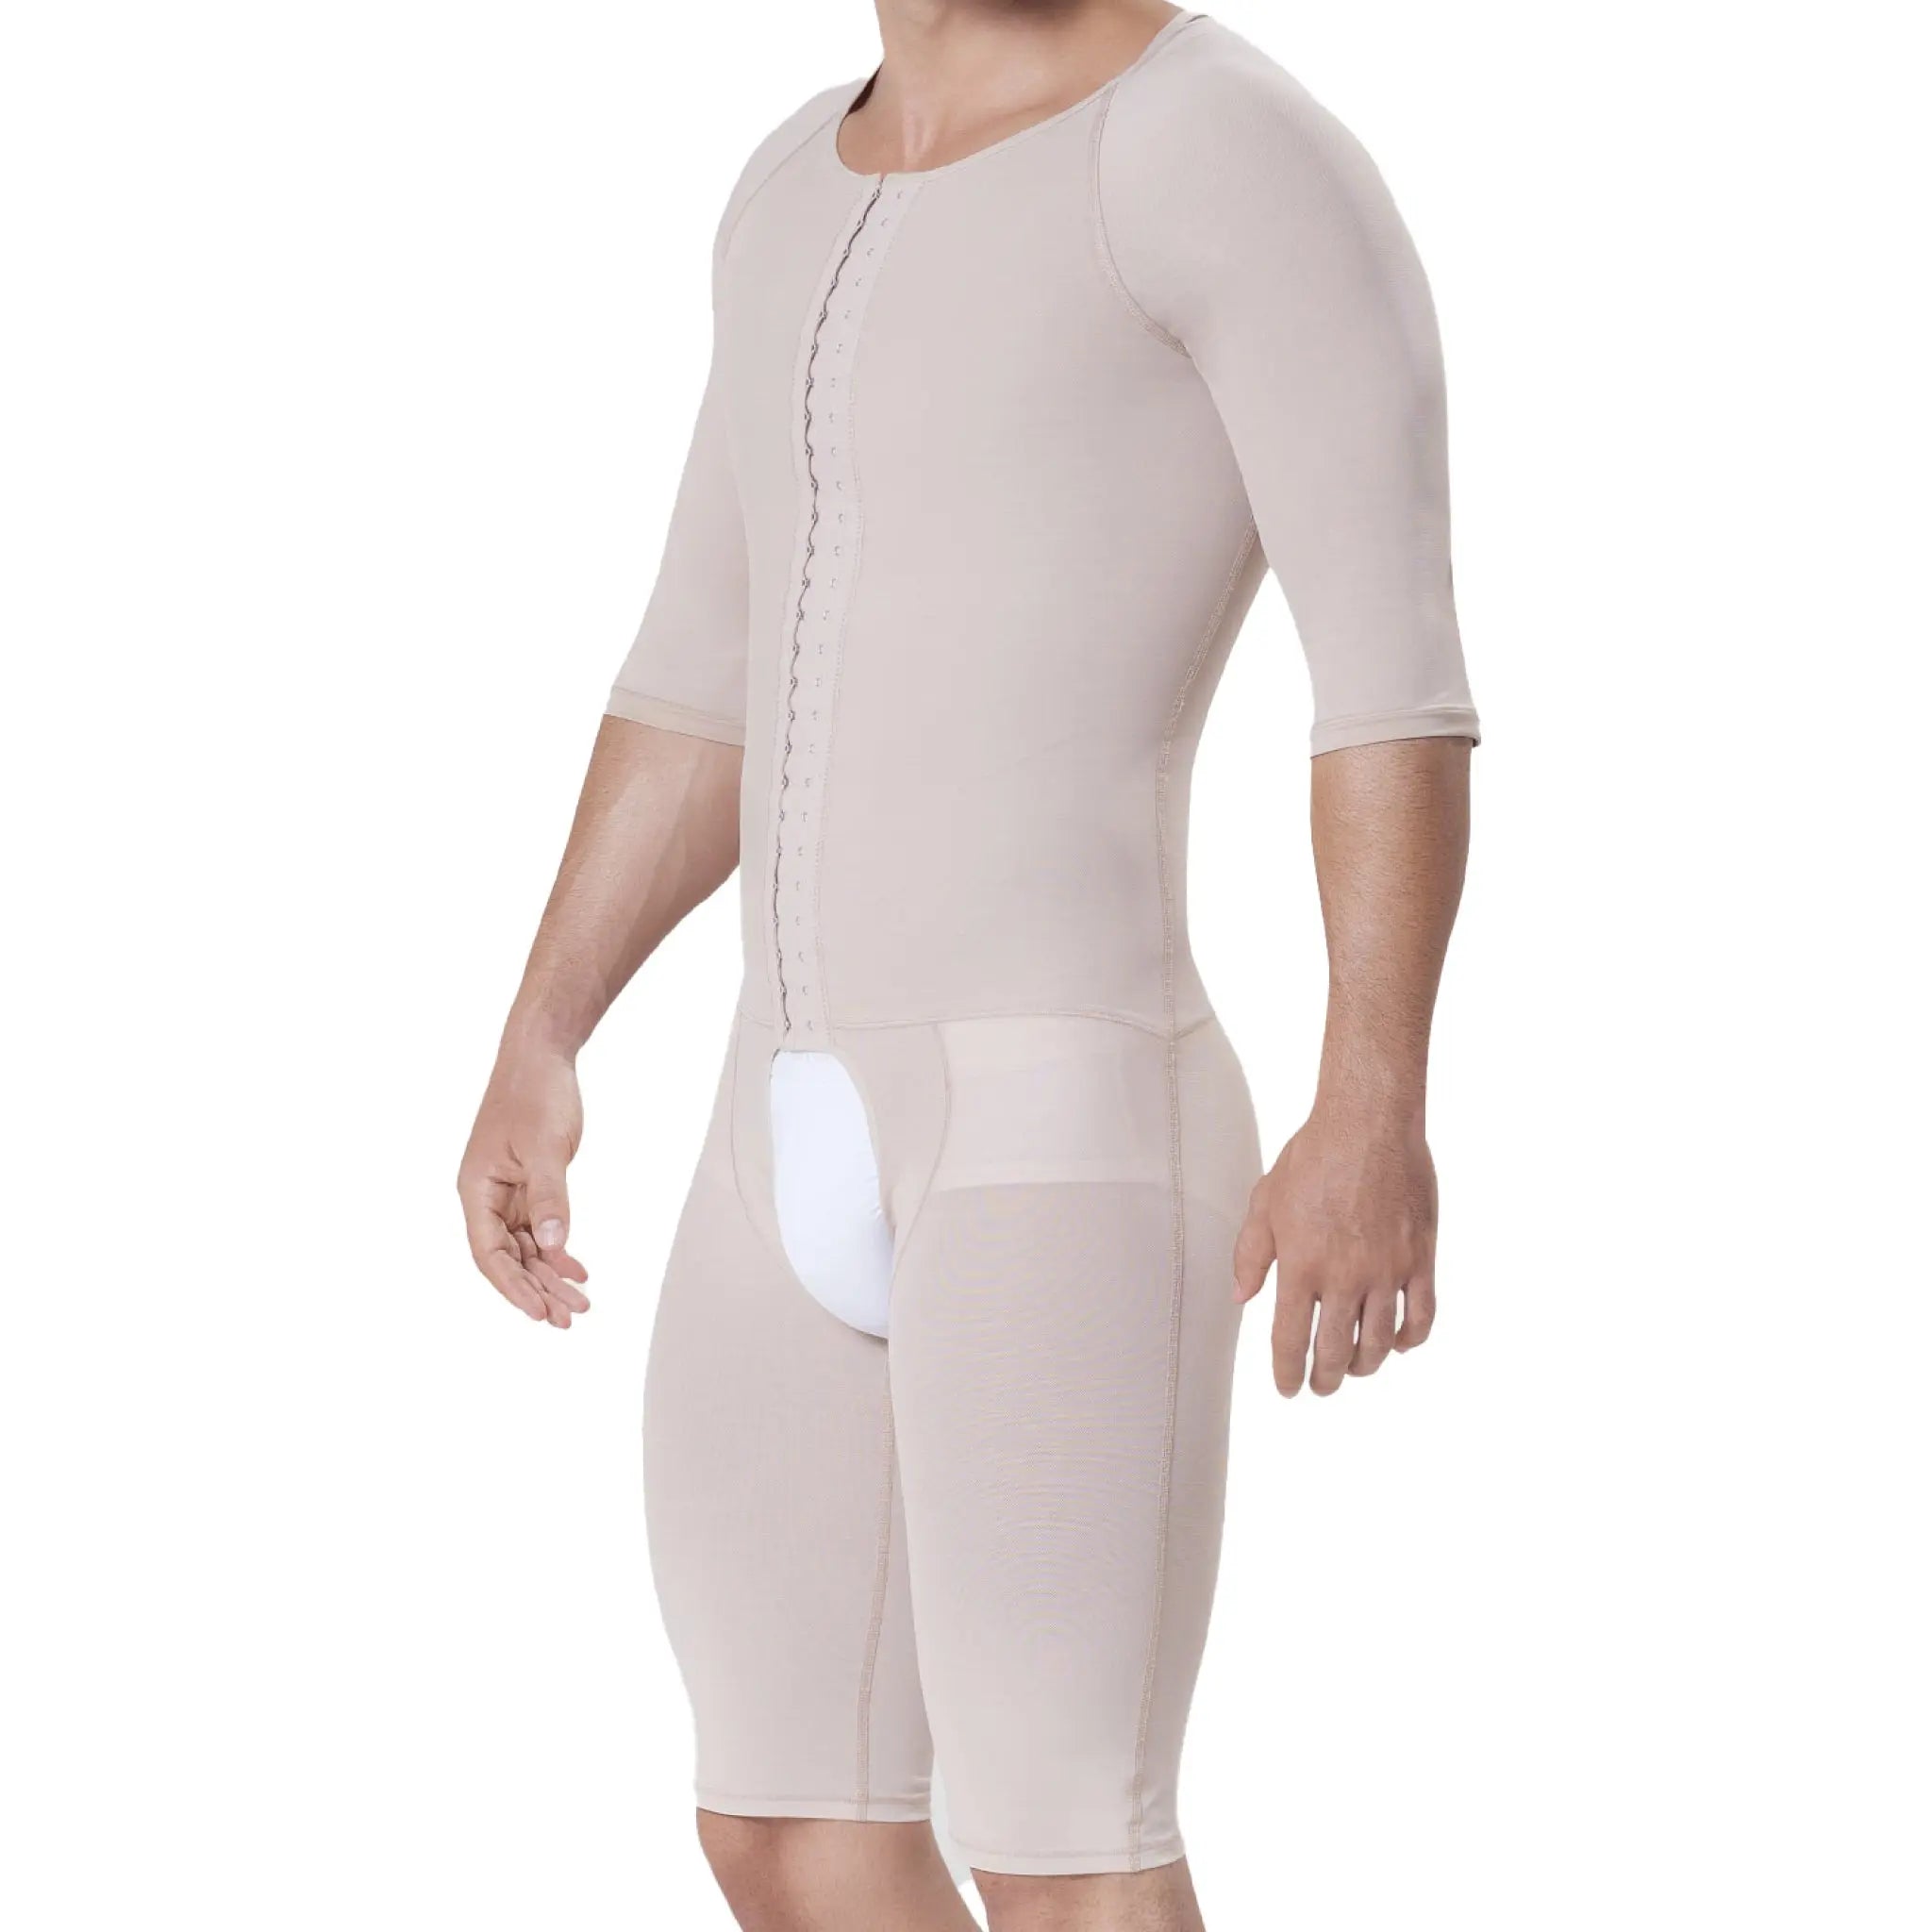  SOLCYSX Mens Sleeveless Full Body Shaper Underwear Slimming Compression  Bodysuit Shapewear Tummy Control Fajas Para Hombres